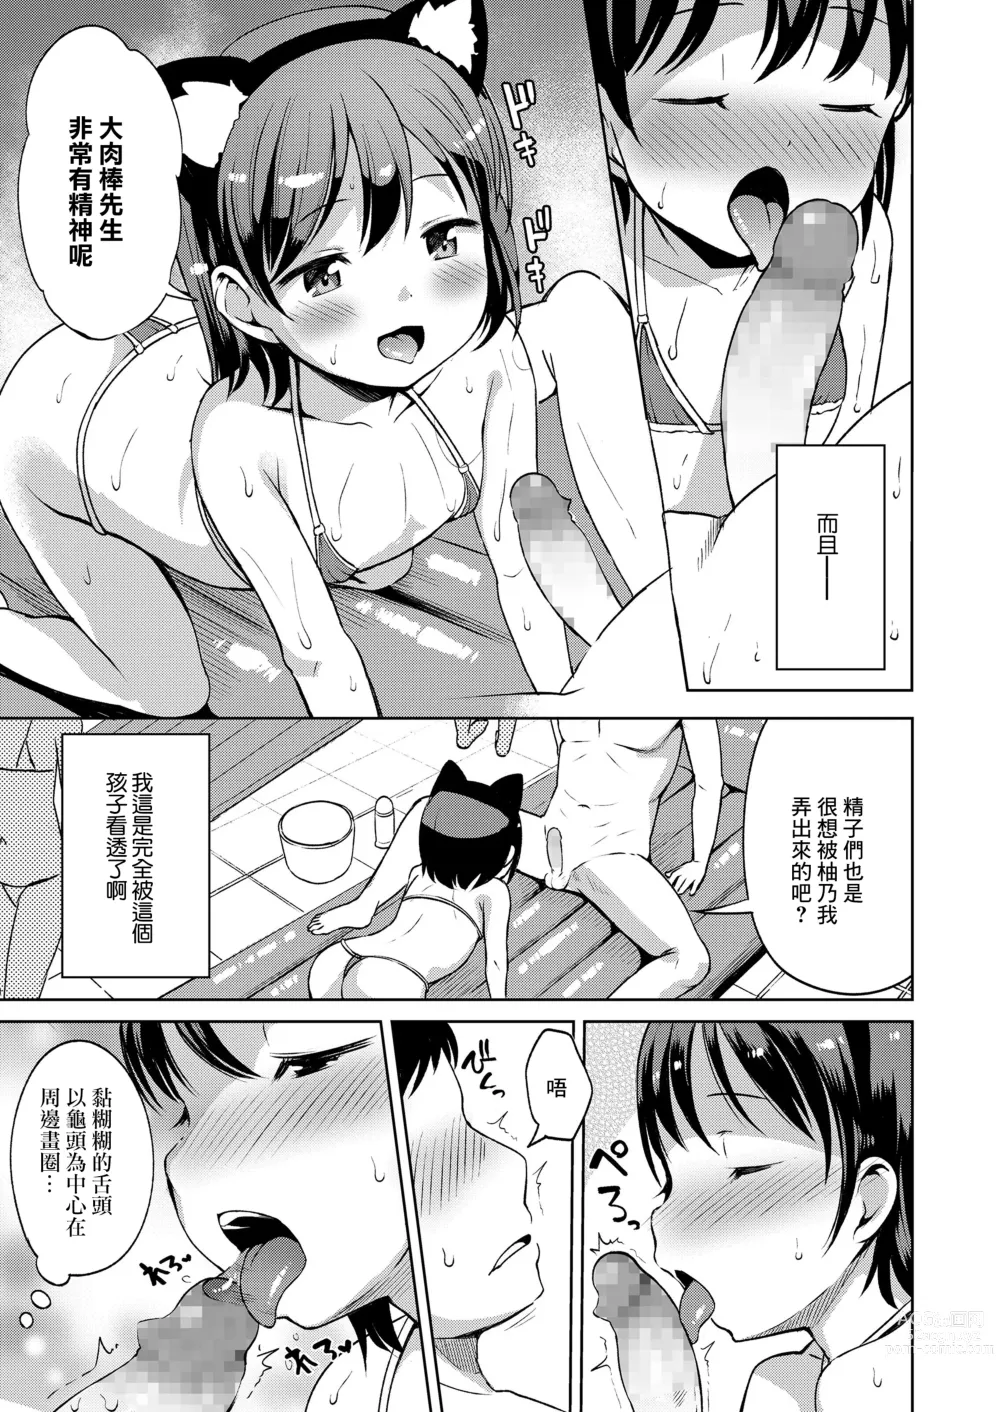 Page 7 of manga Yuno-chan Play